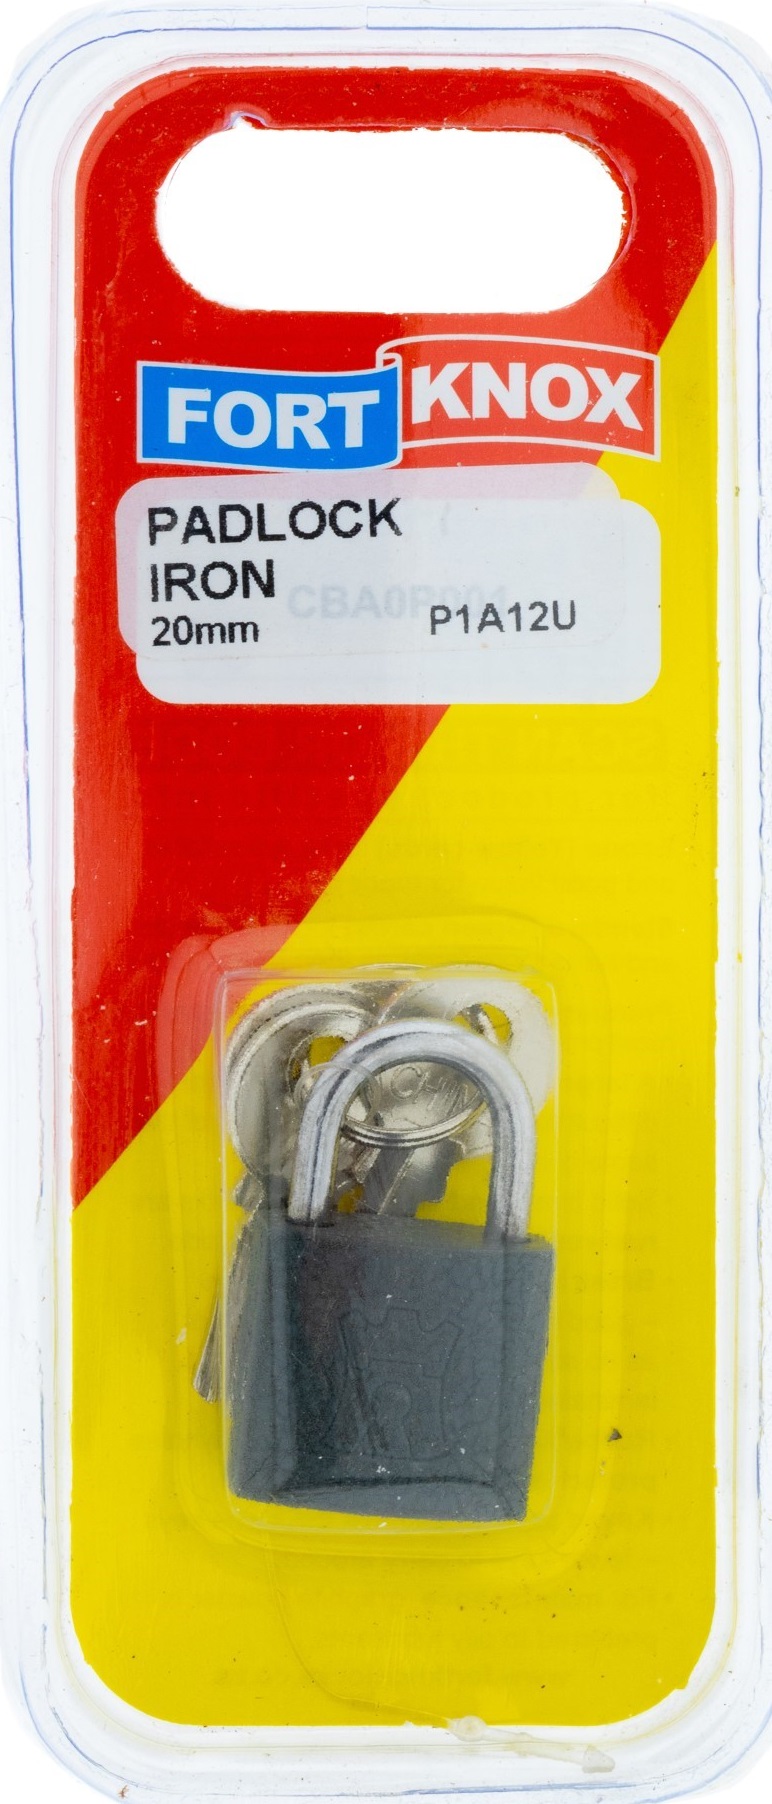 Iron padlock, mainly used indoors.